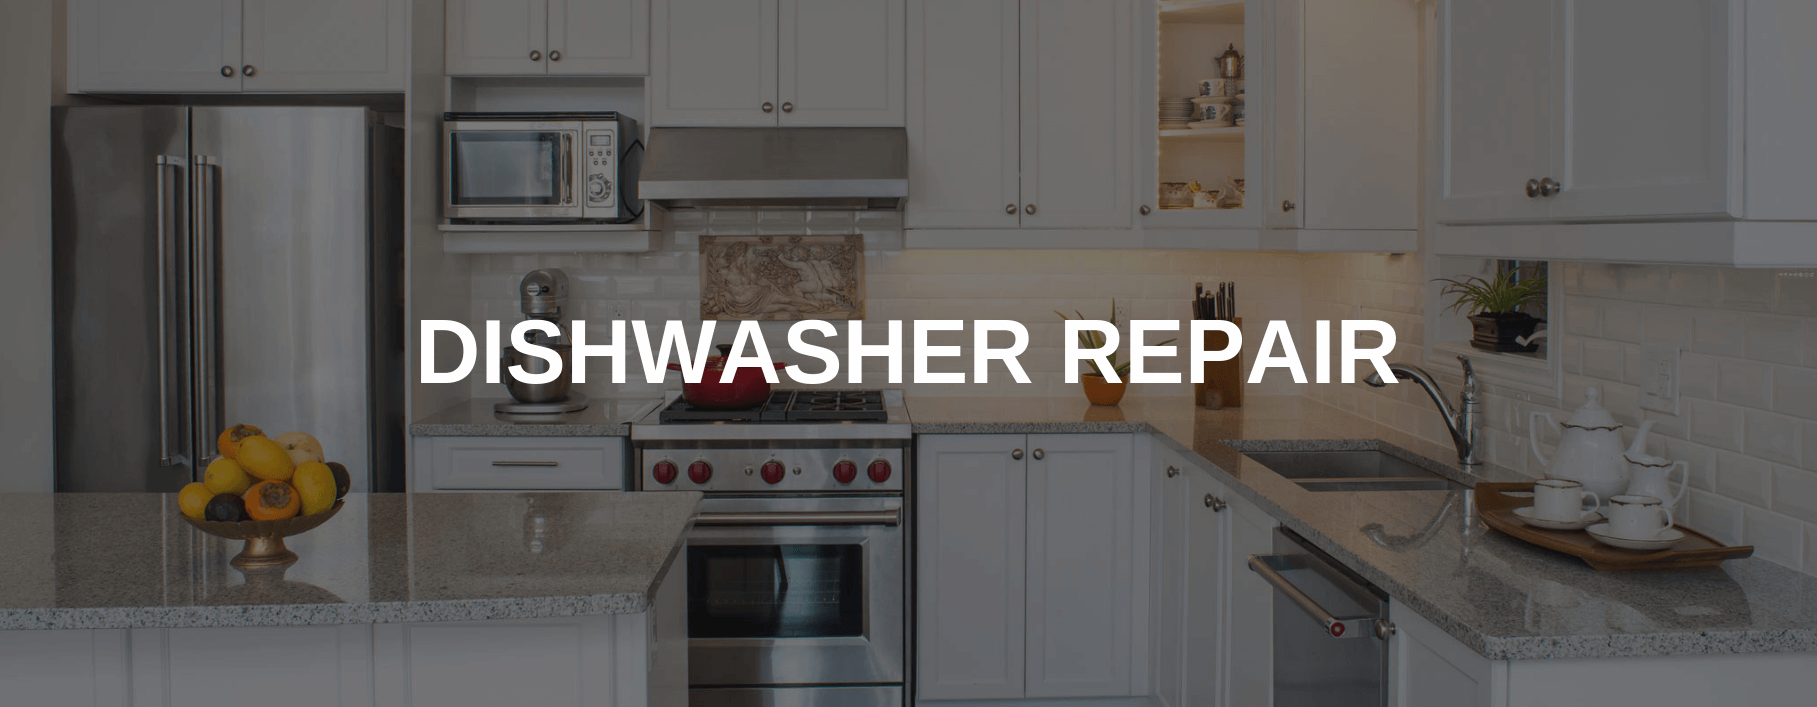 dishwasher repair fort worth